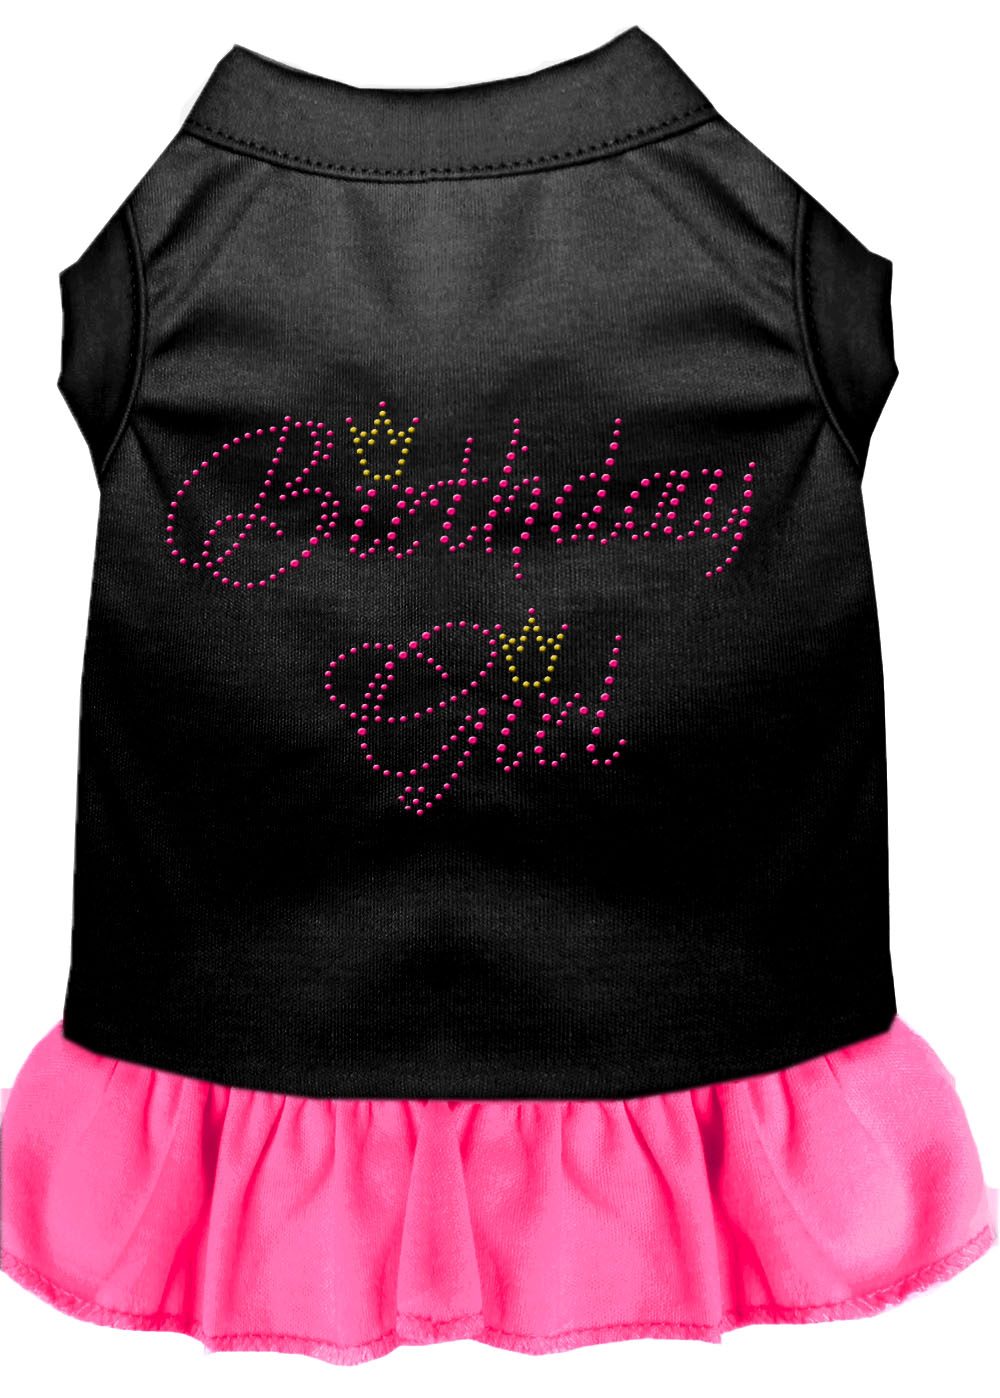 Birthday Girl Rhinestone Dress Black with Bright Pink Lg